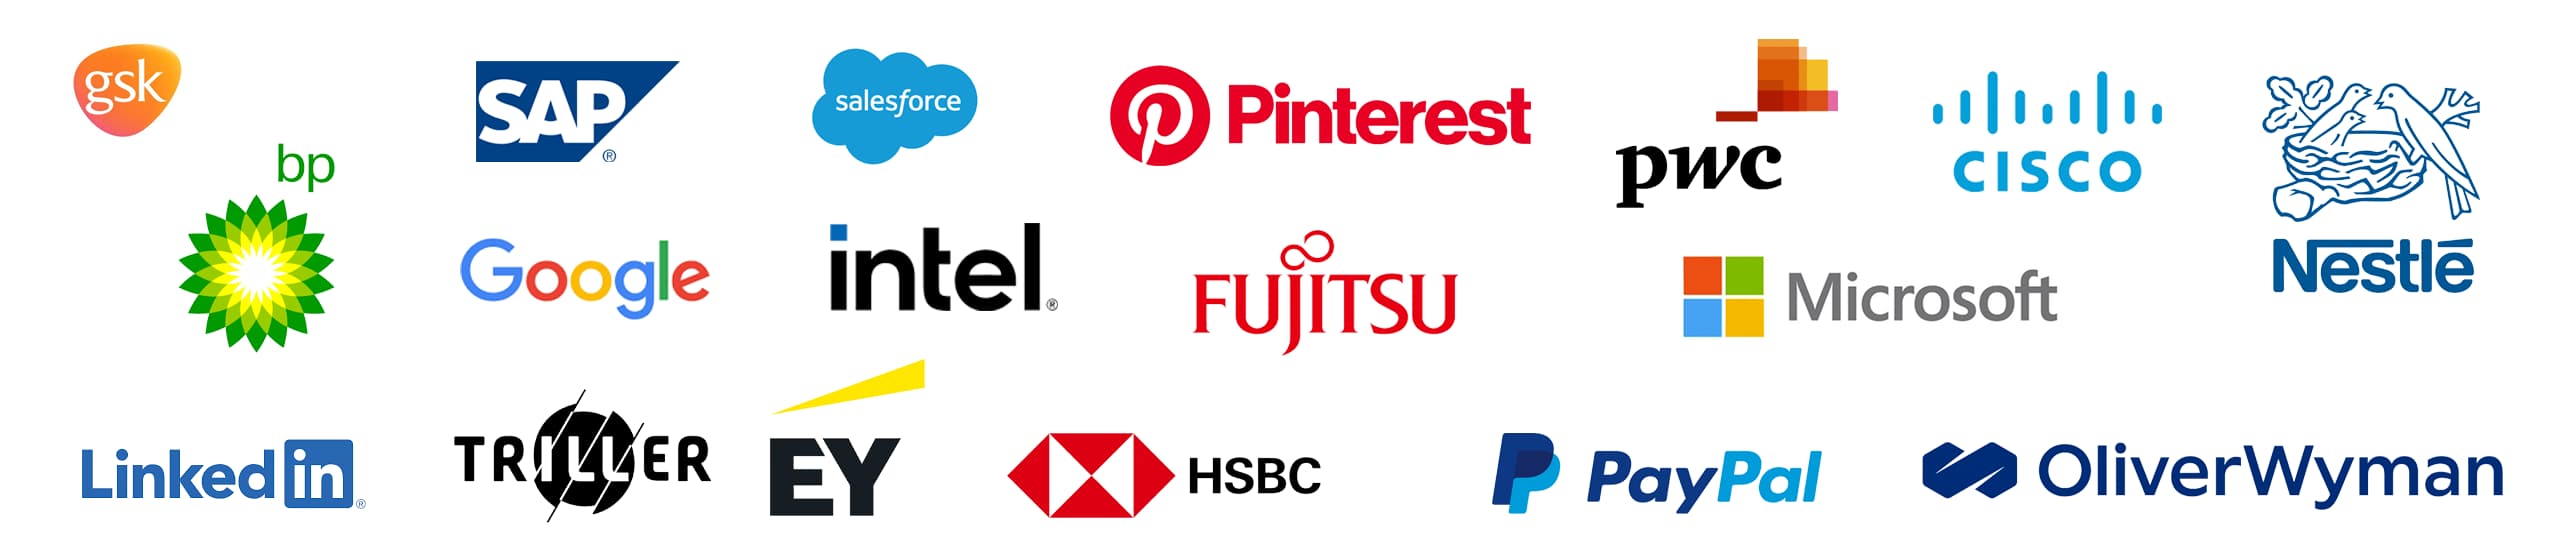 Corporate Entertainment Agency Client Logos